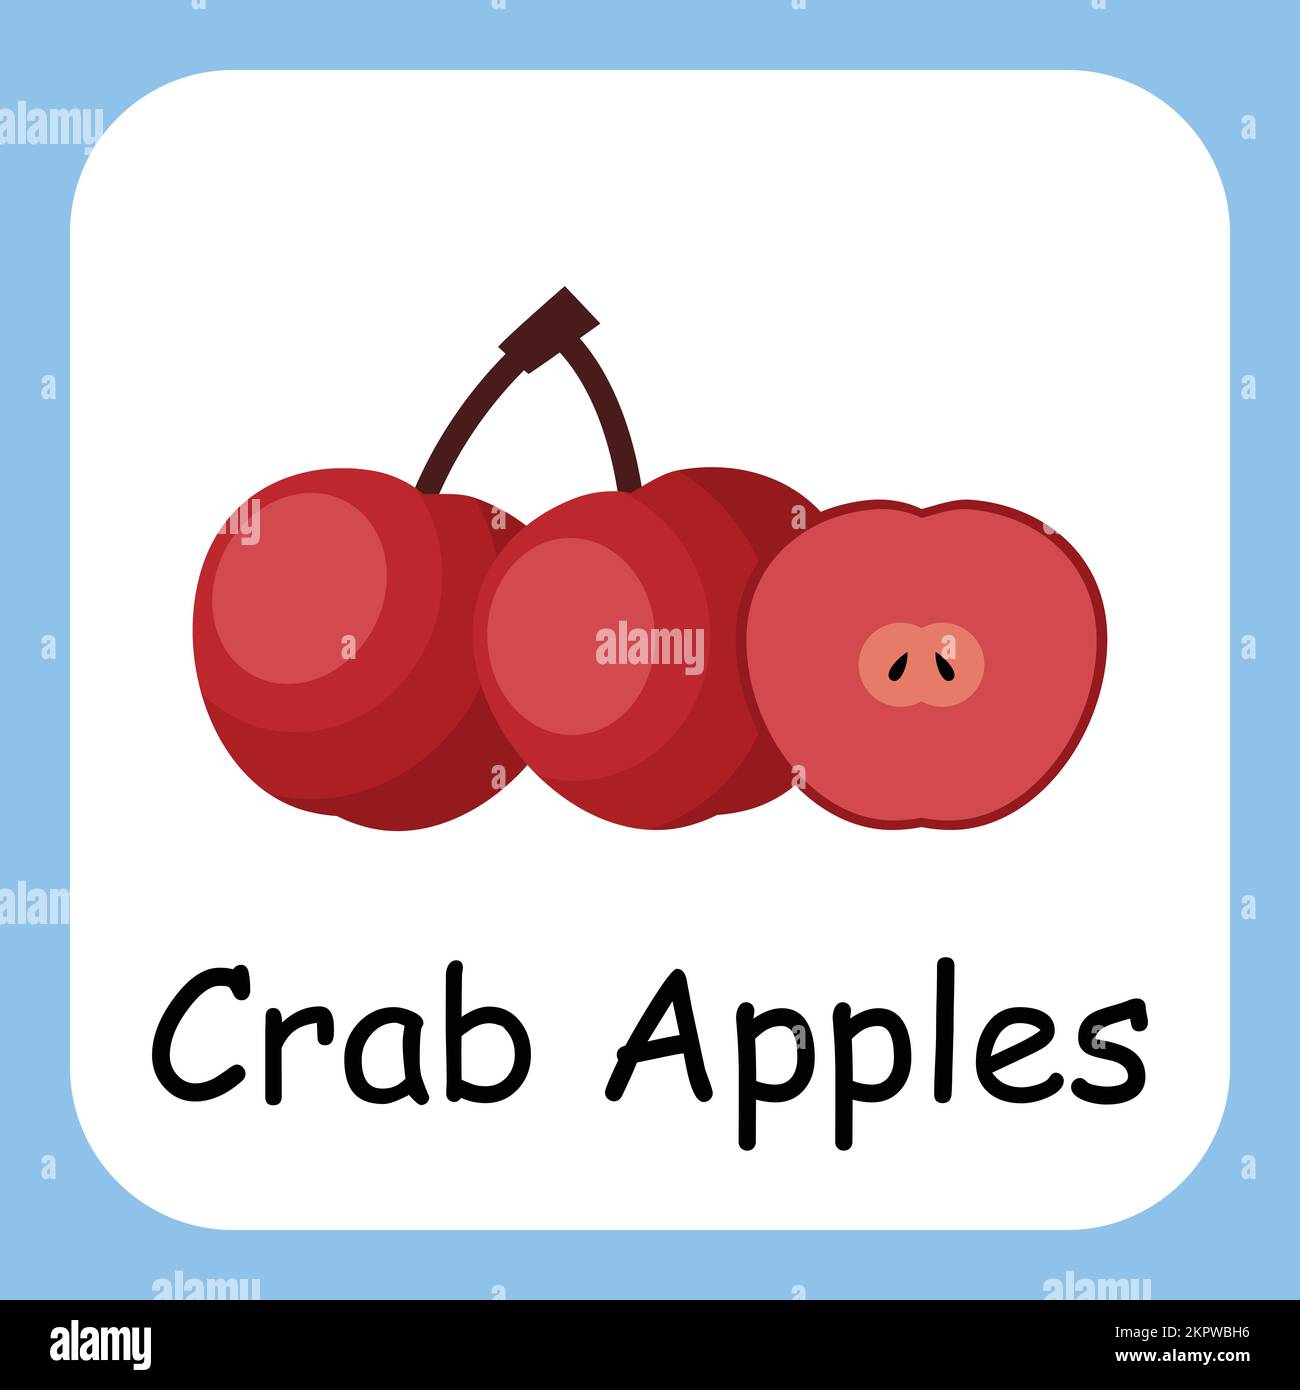 Crab Apples Clip Art, Illustration for Kids, cartoon fruit illustration Stock Vector